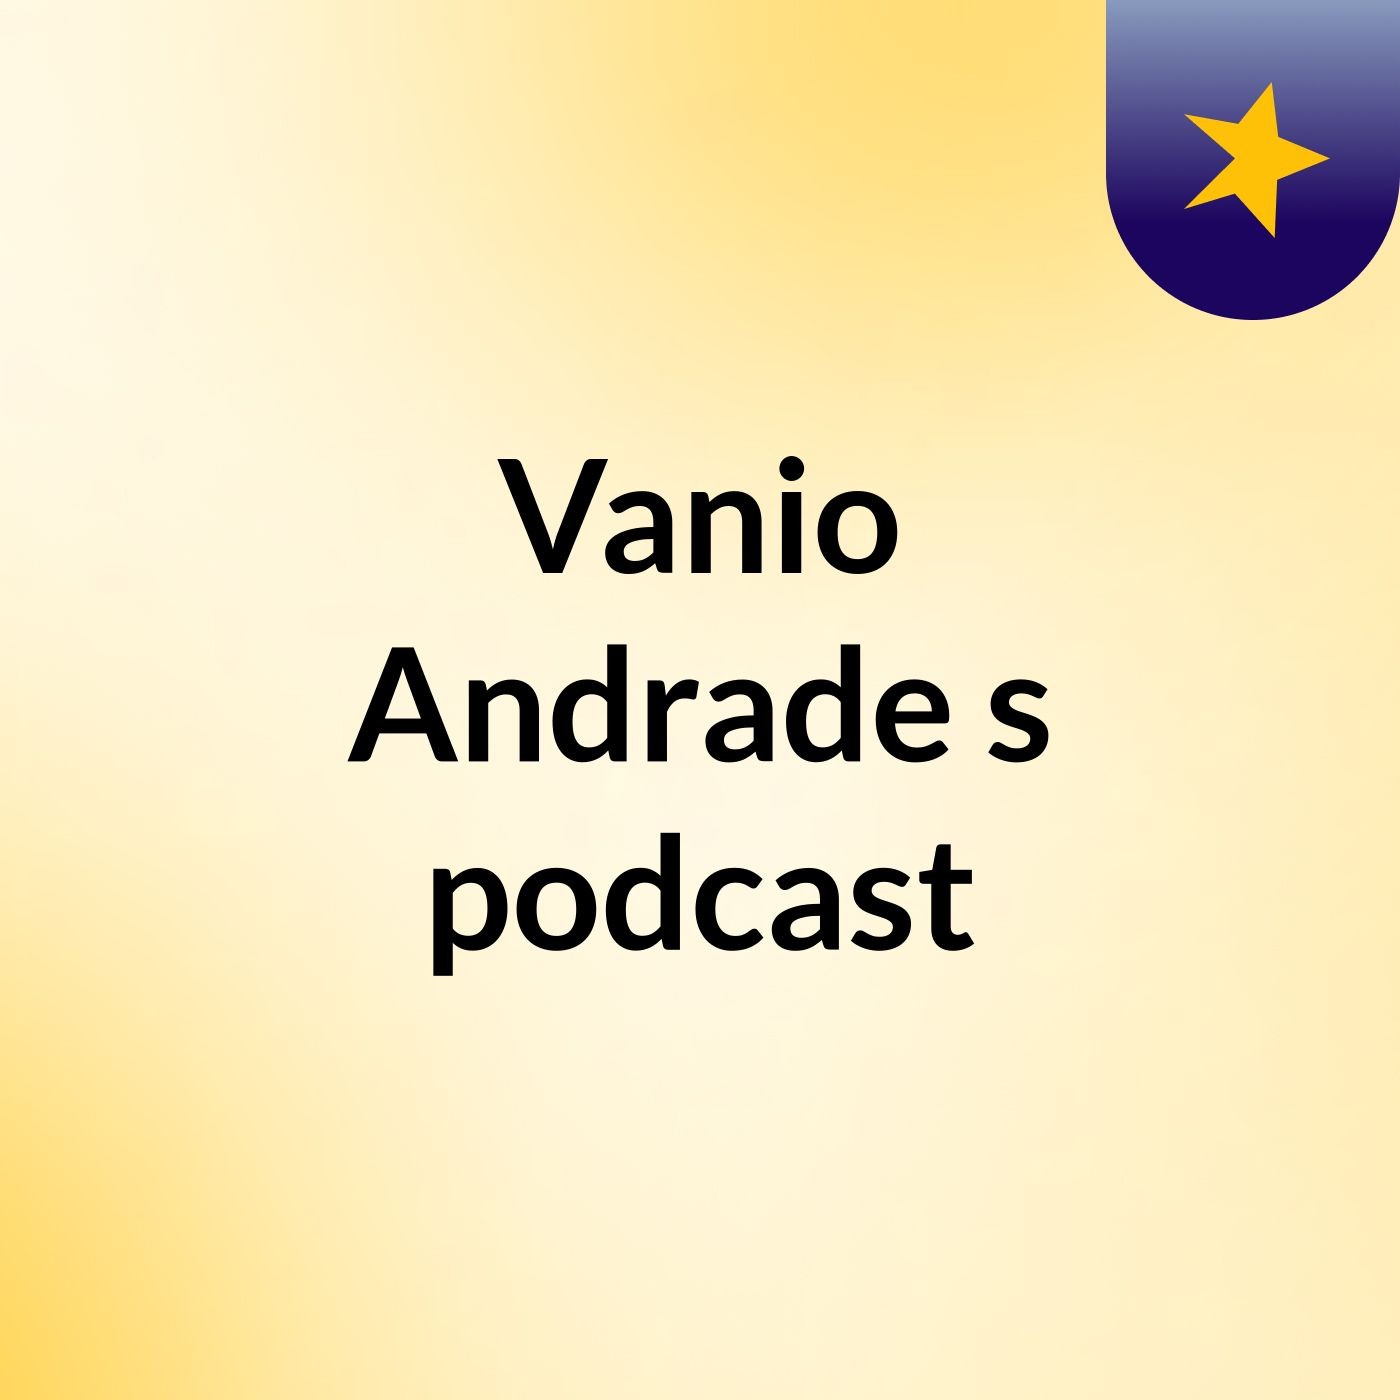 Vanio Andrade's podcast